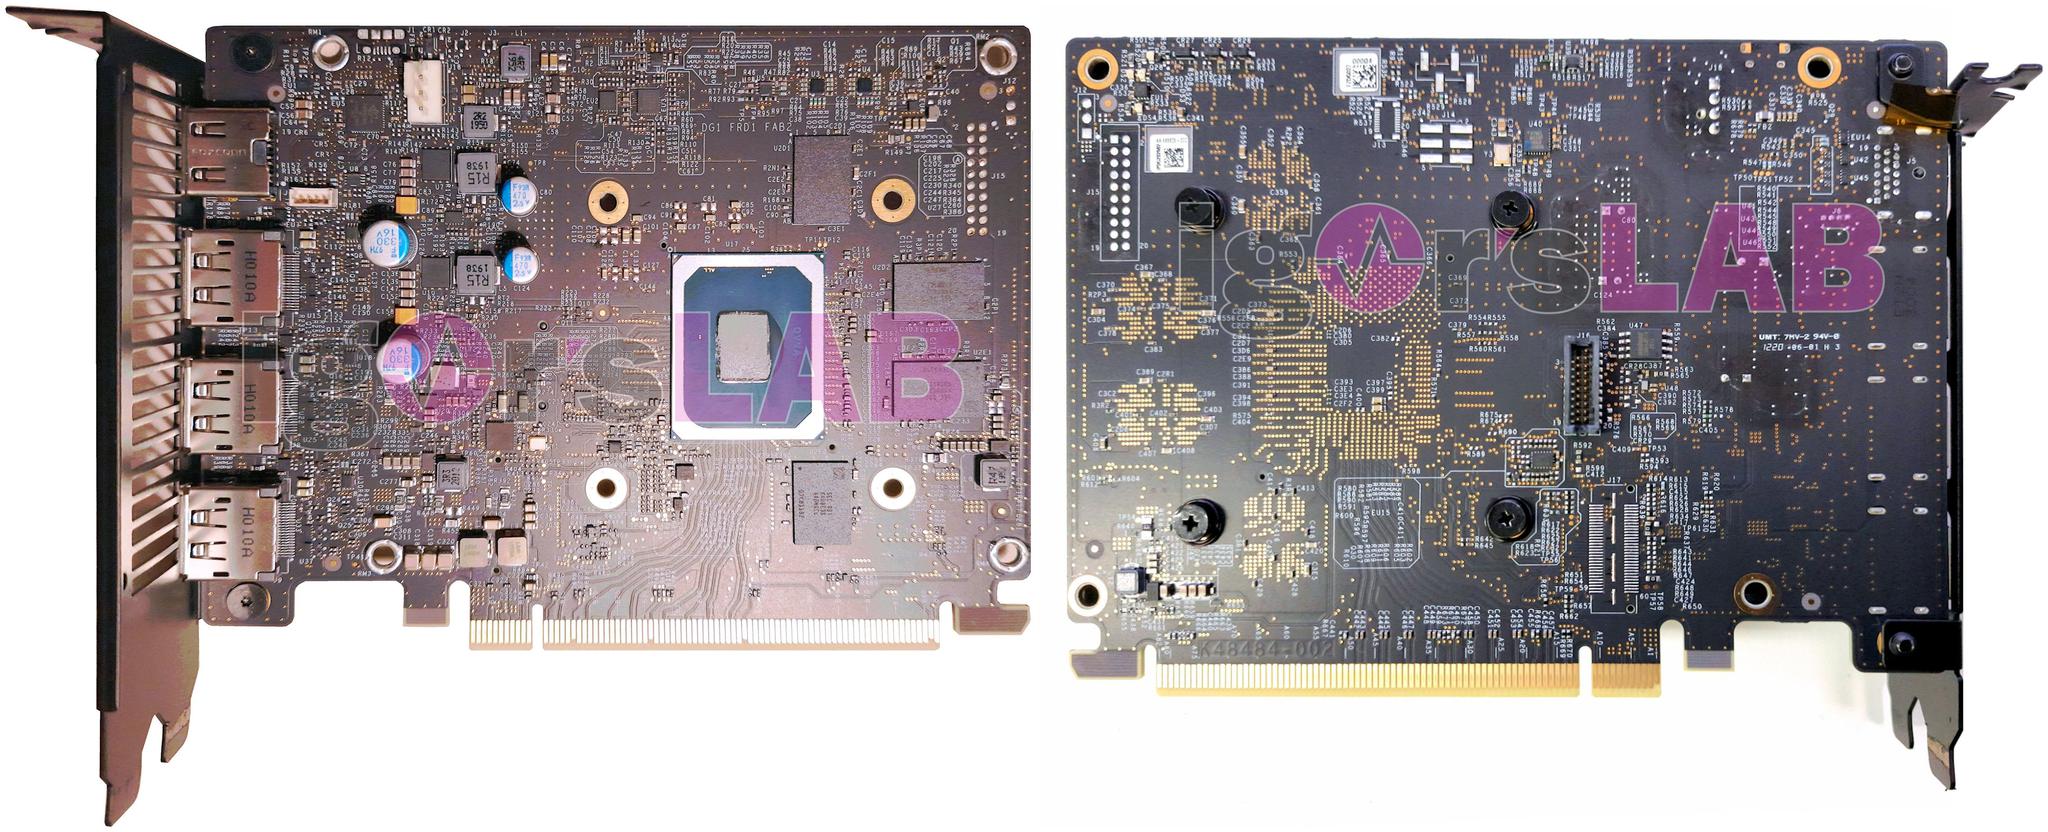 Intel DG1独显拆解出炉 最大功耗不到30瓦、官方锁死不准跑分